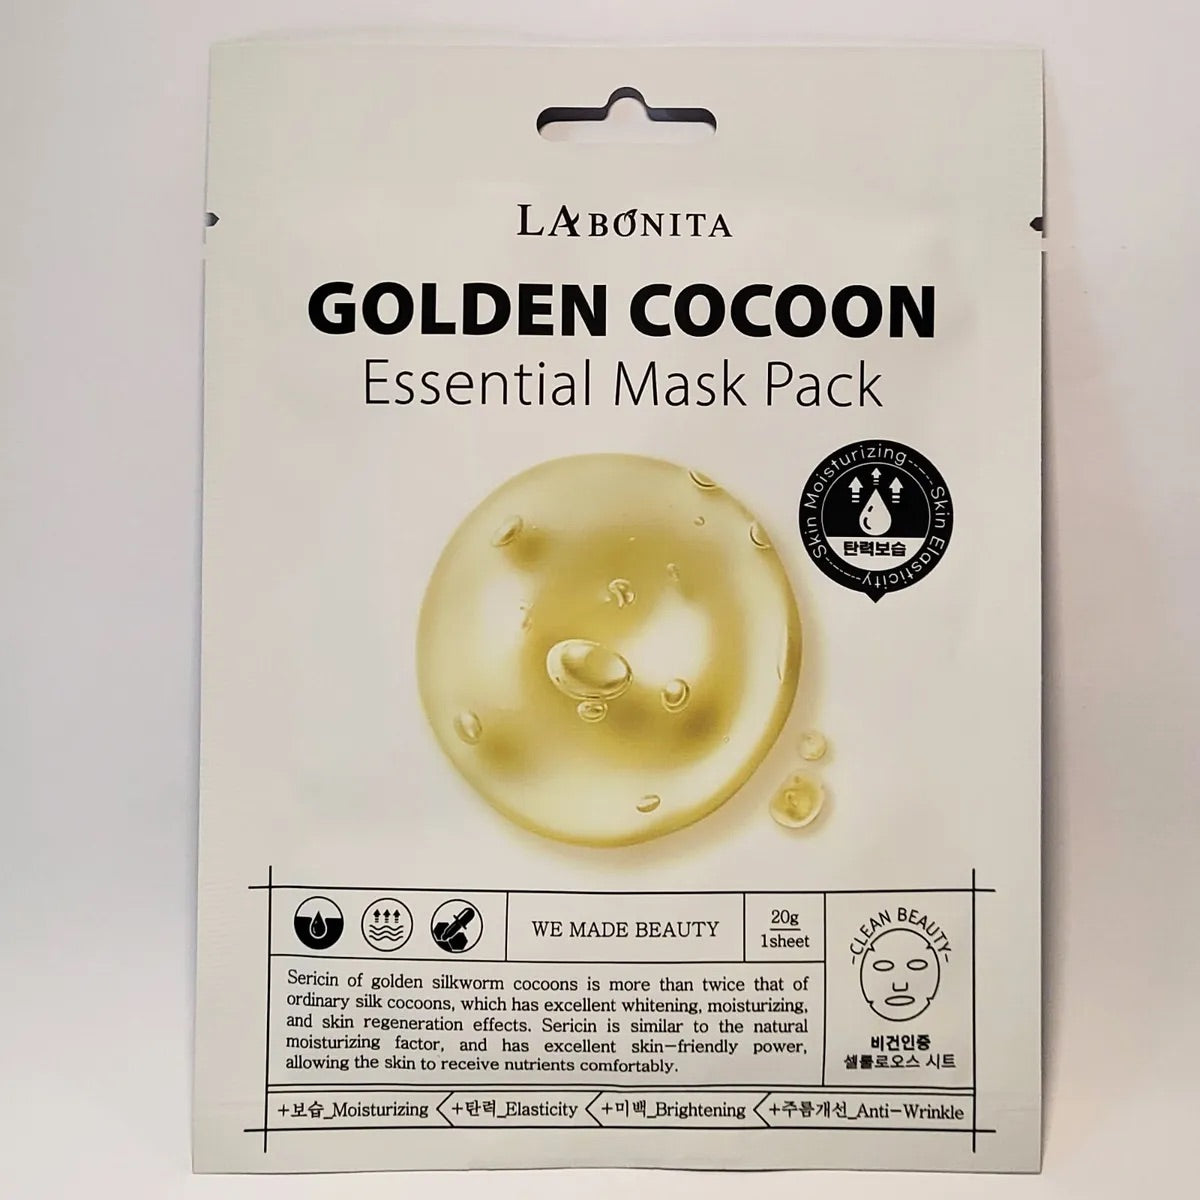 La Bonita Golden Cocoon Essential Mask Pack